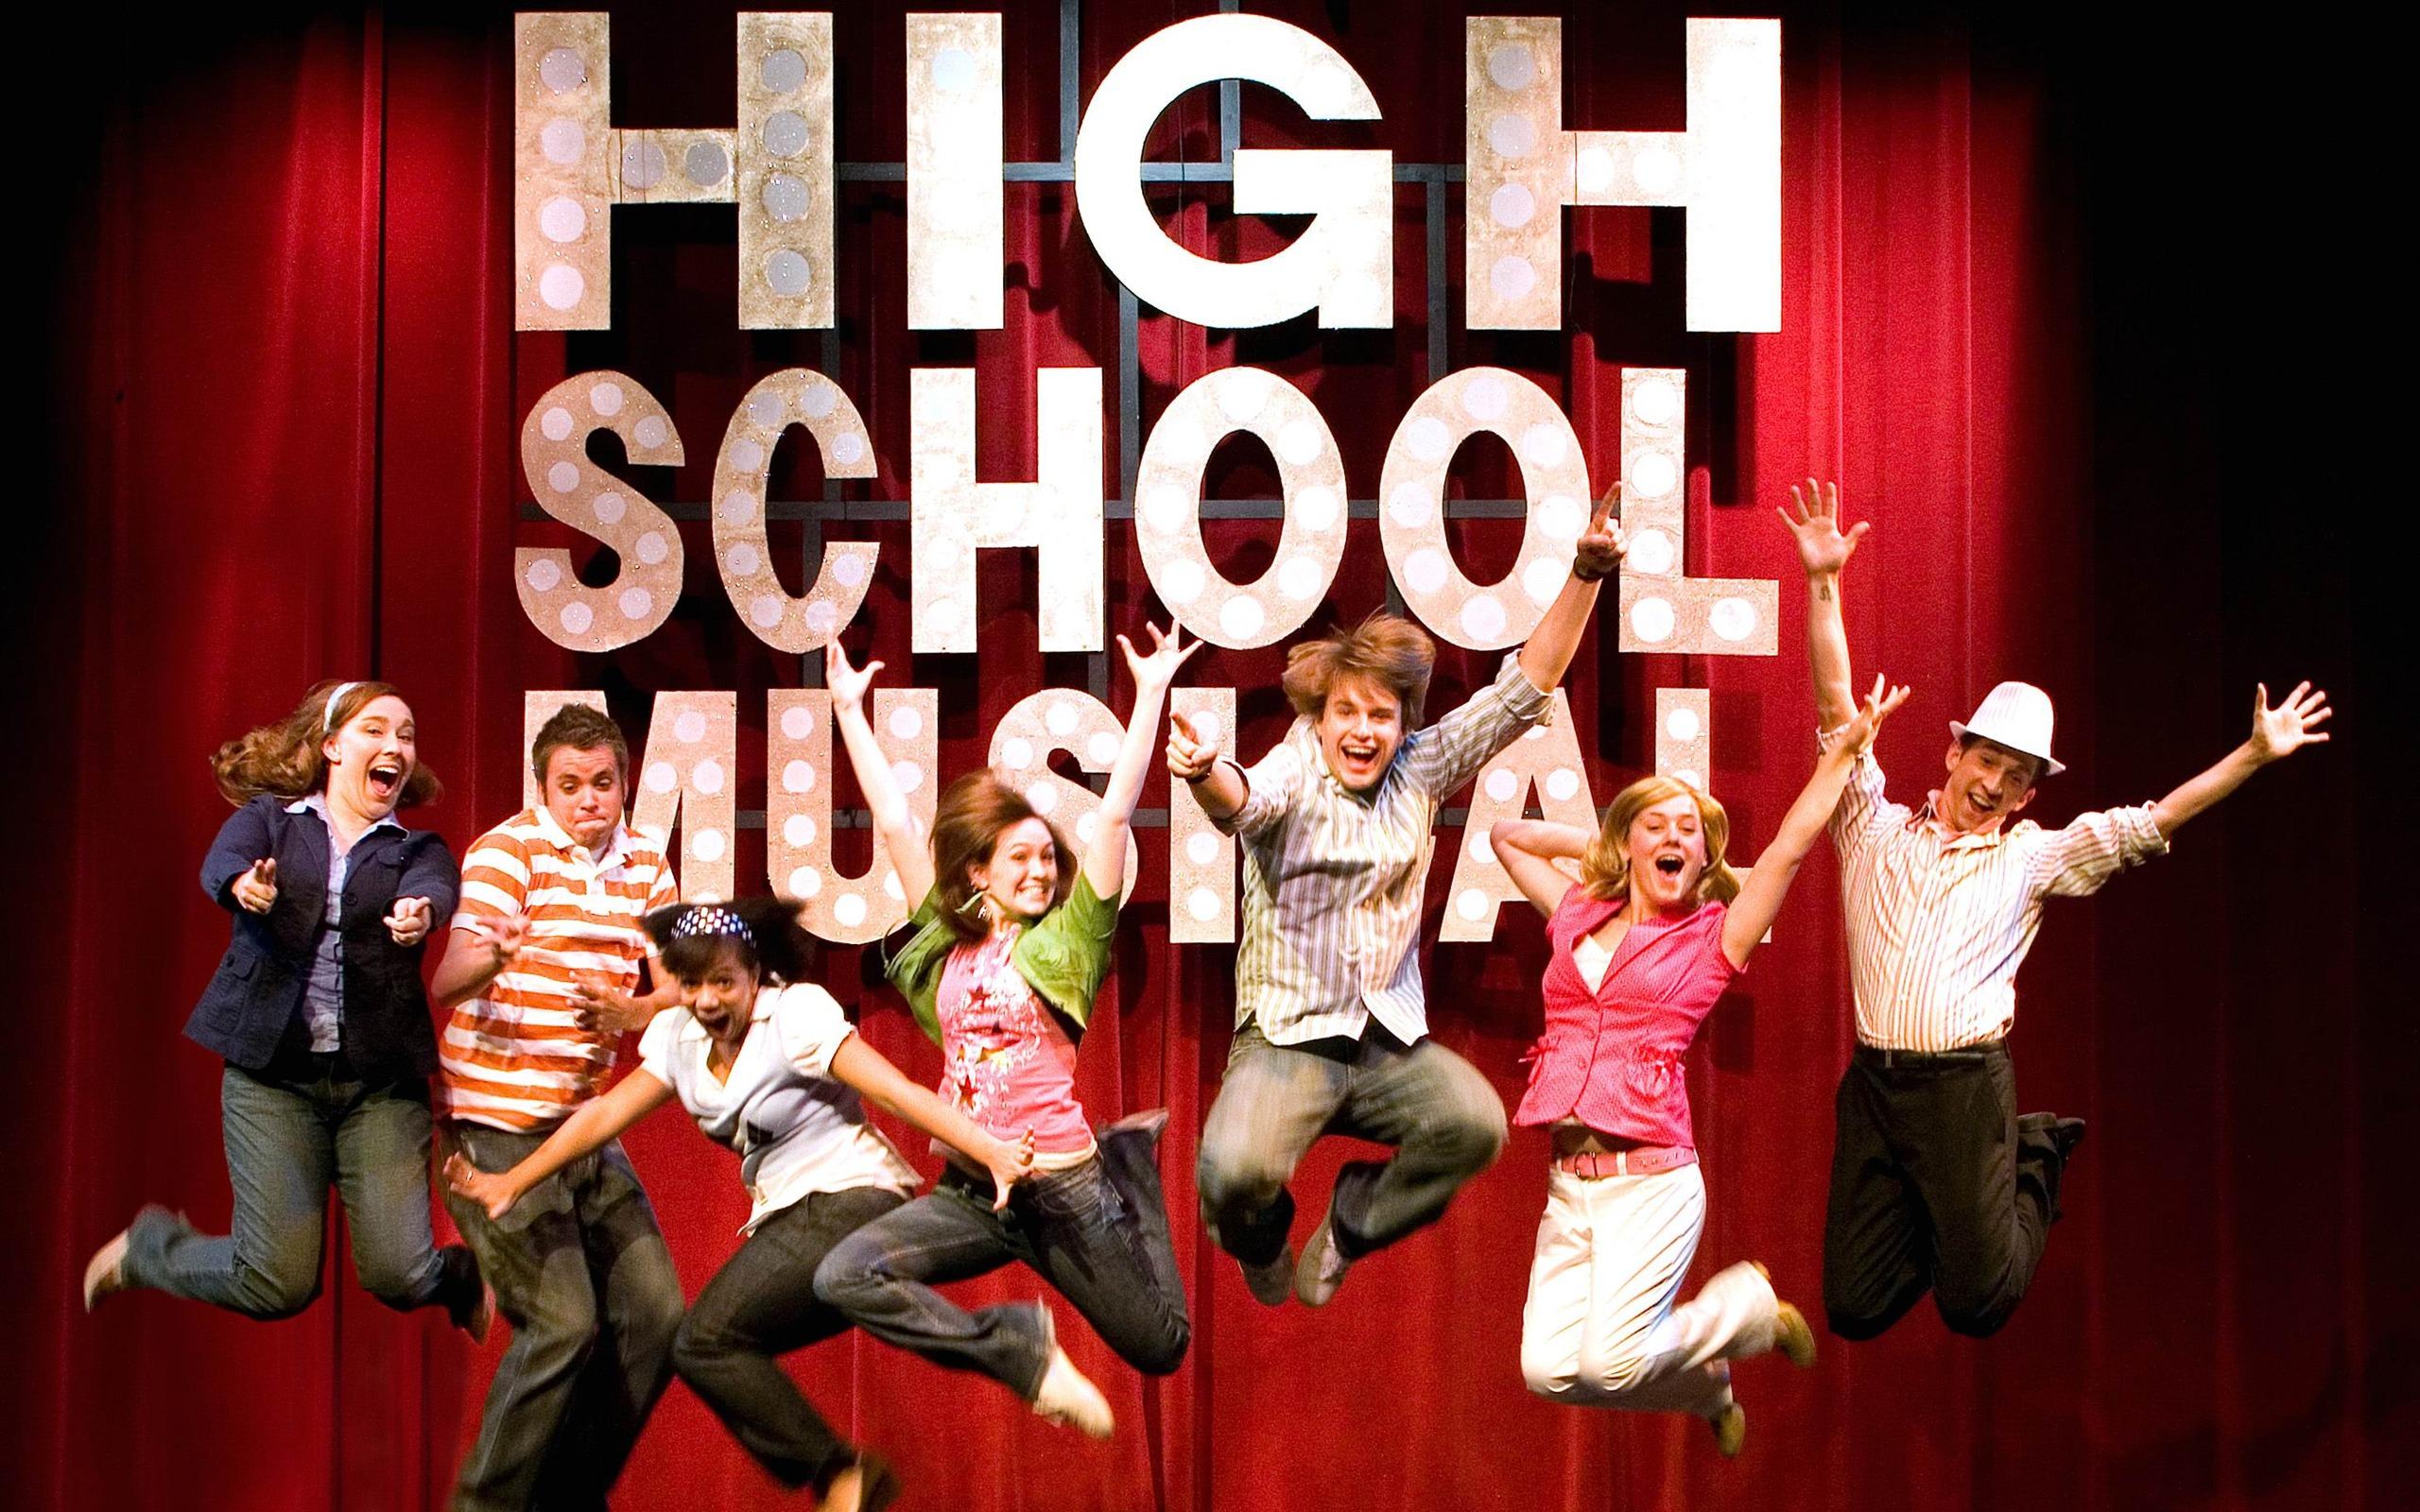 2560x1600px High School Musical (951.55 KB).09.2015